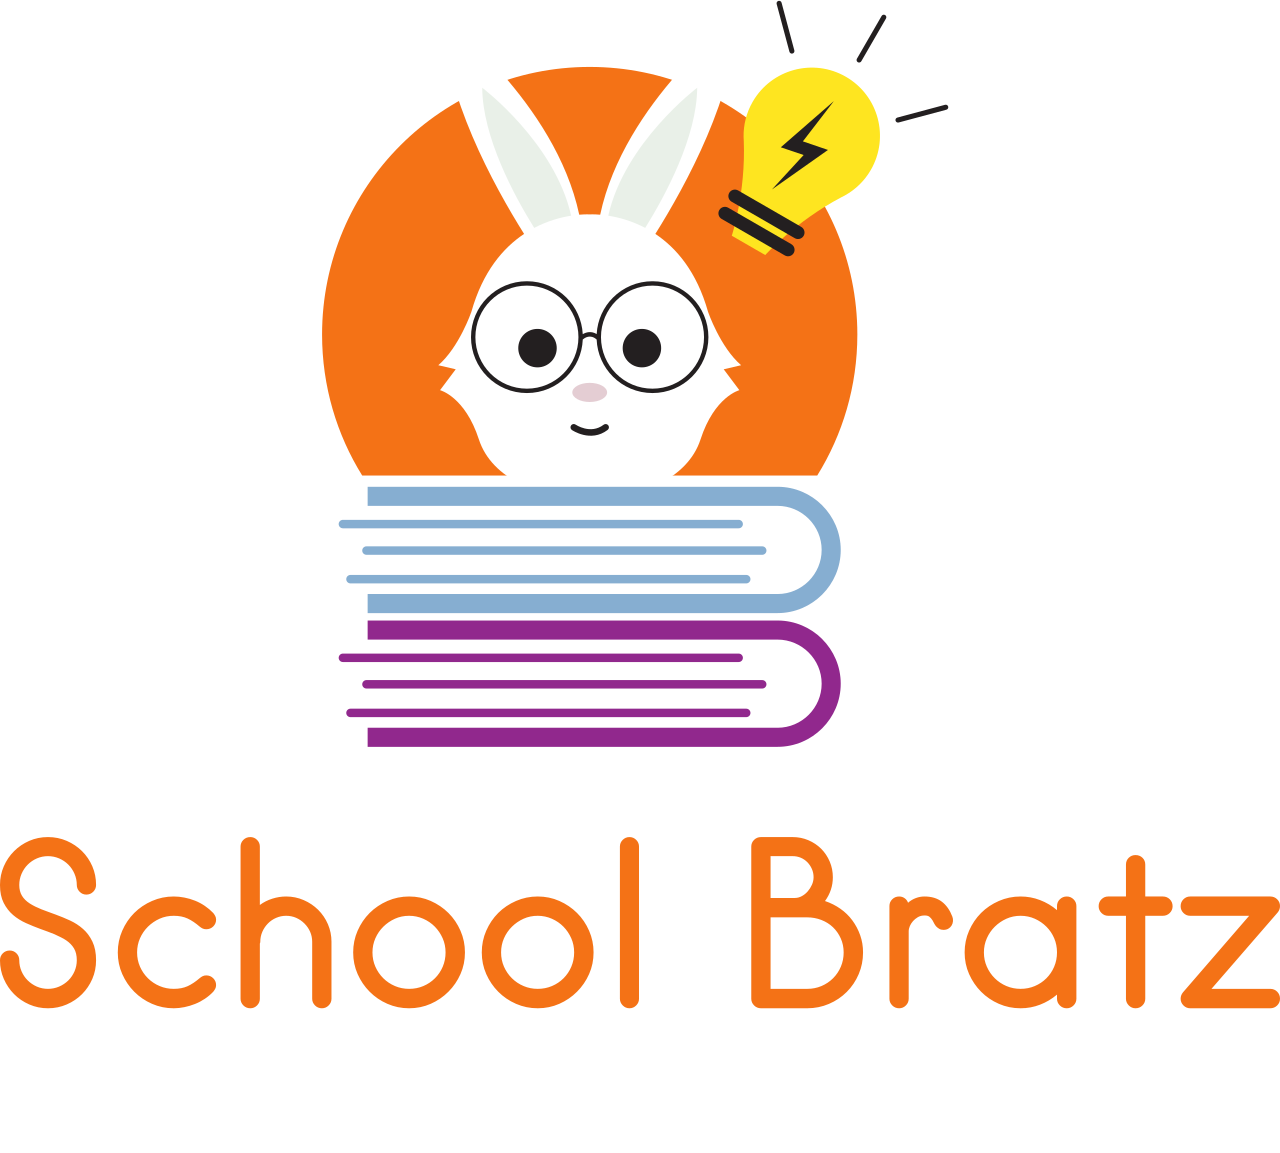 School Bratz's web page